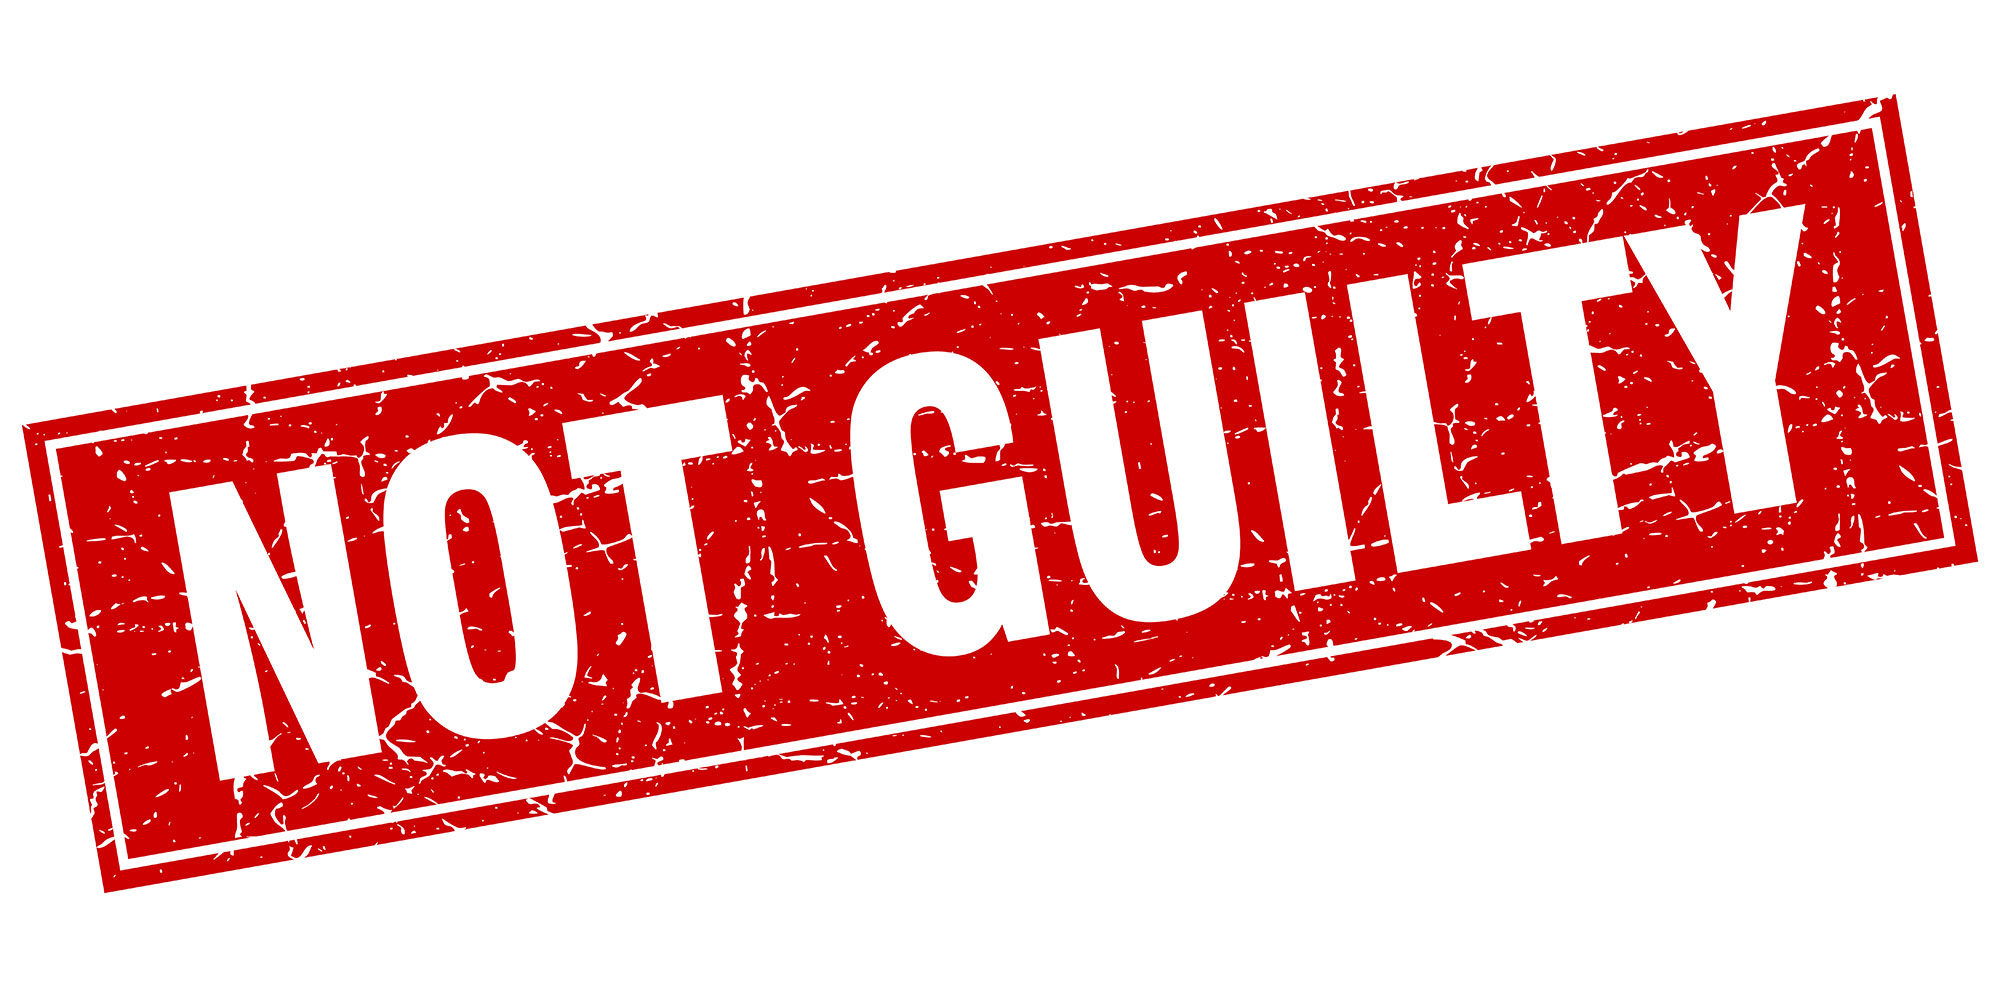 “Not Guilty” Vindicates Client Arrested for a DUI